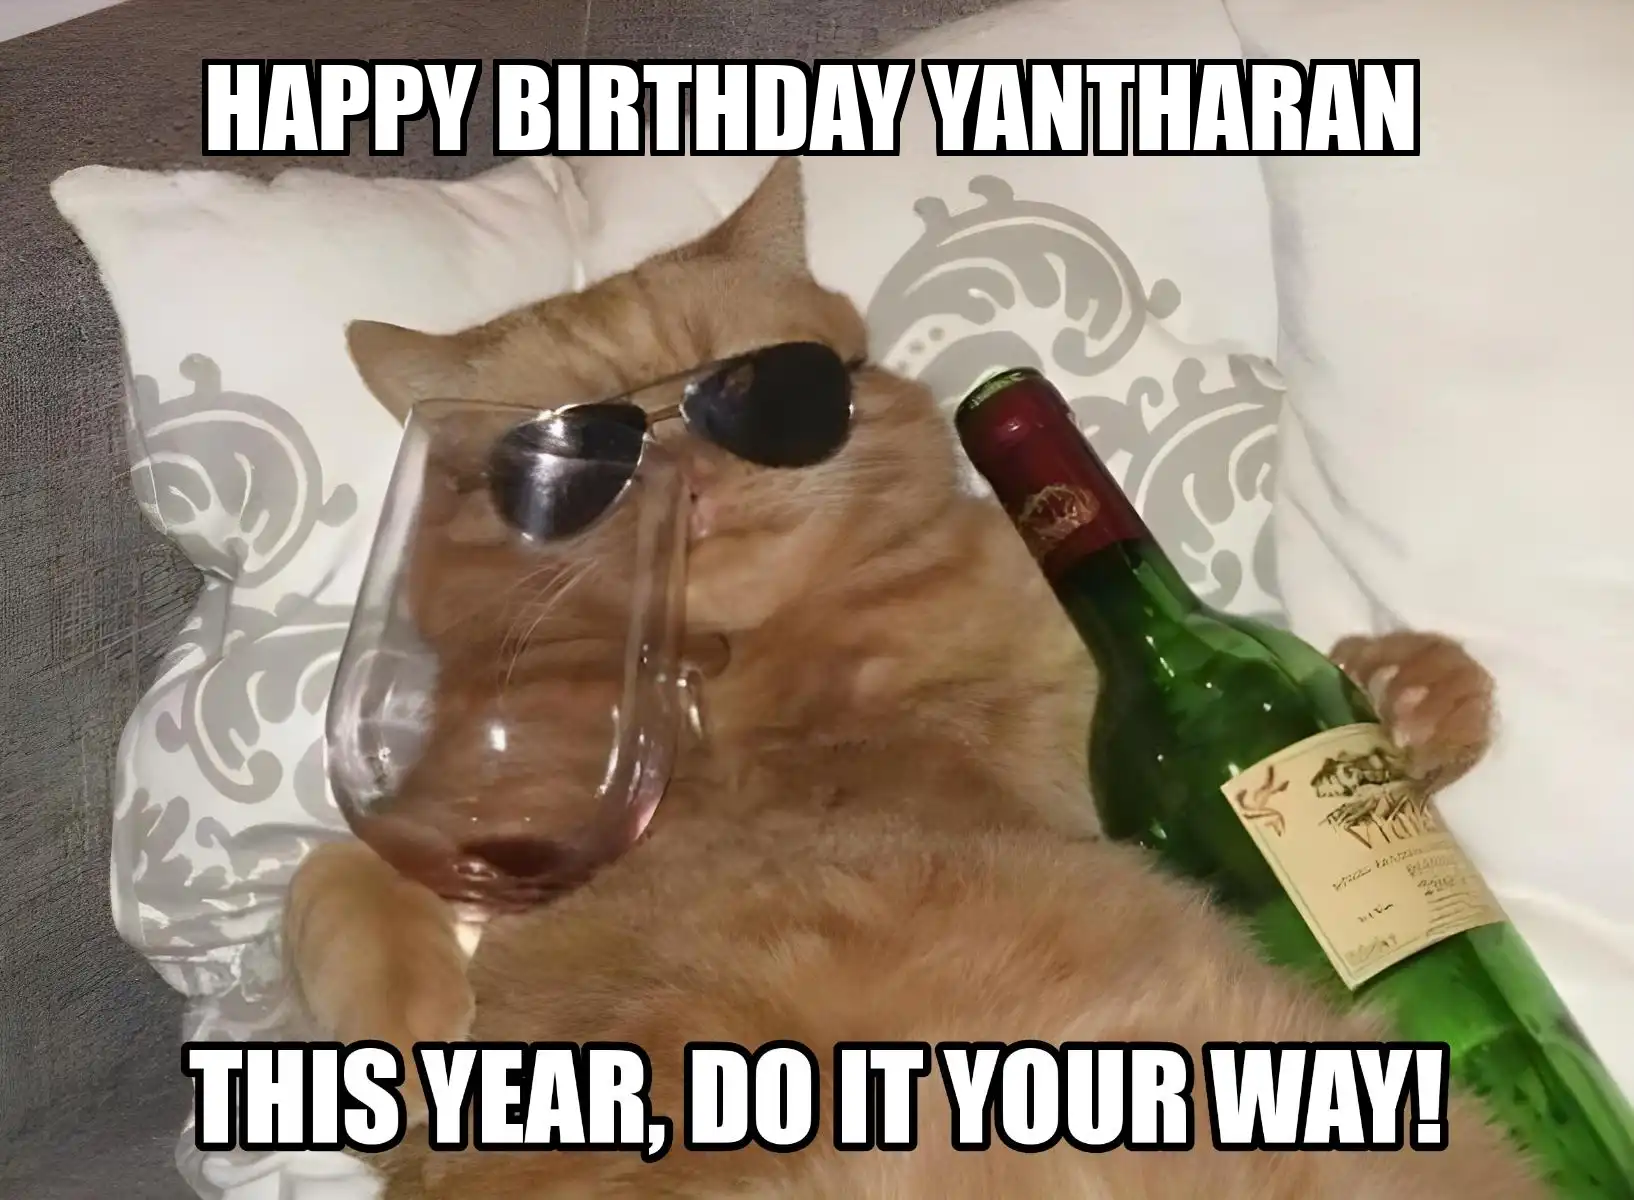 Happy Birthday Yantharan This Year Do It Your Way Meme